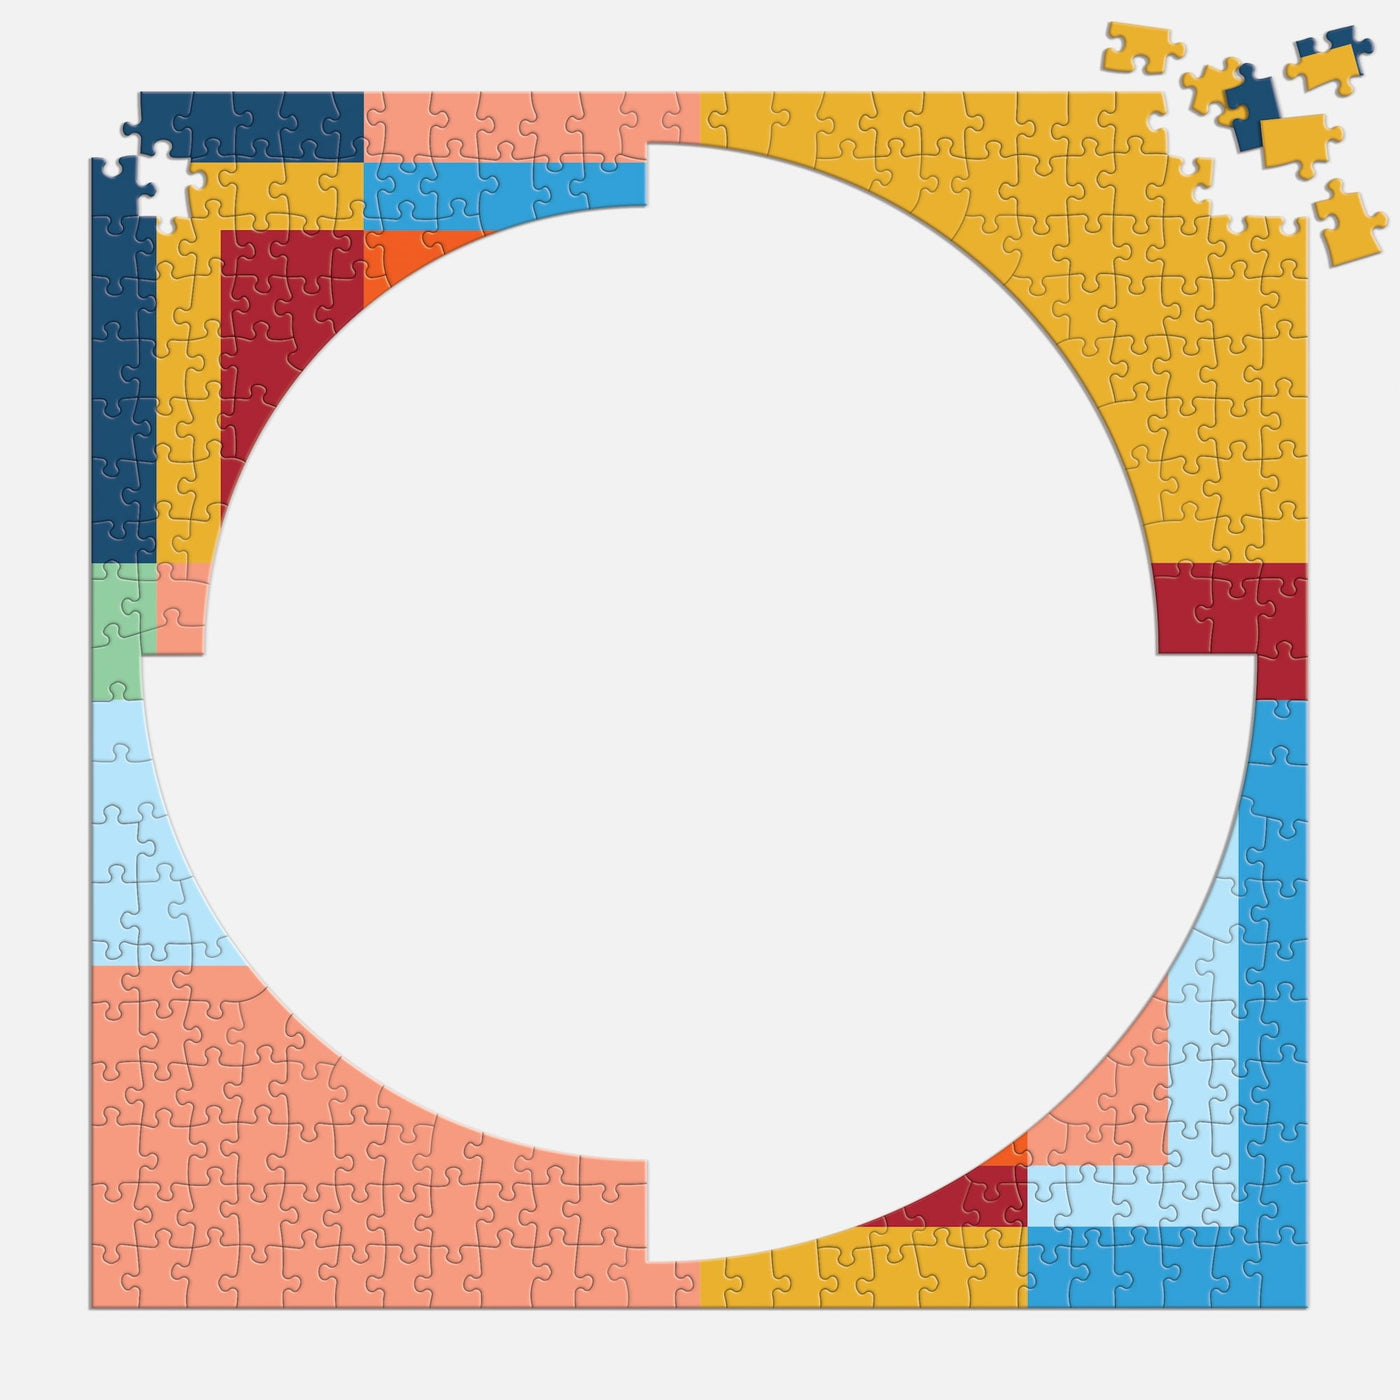 Frank Lloyd Wright Organic Geometry | 500 Piece Jigsaw Puzzle